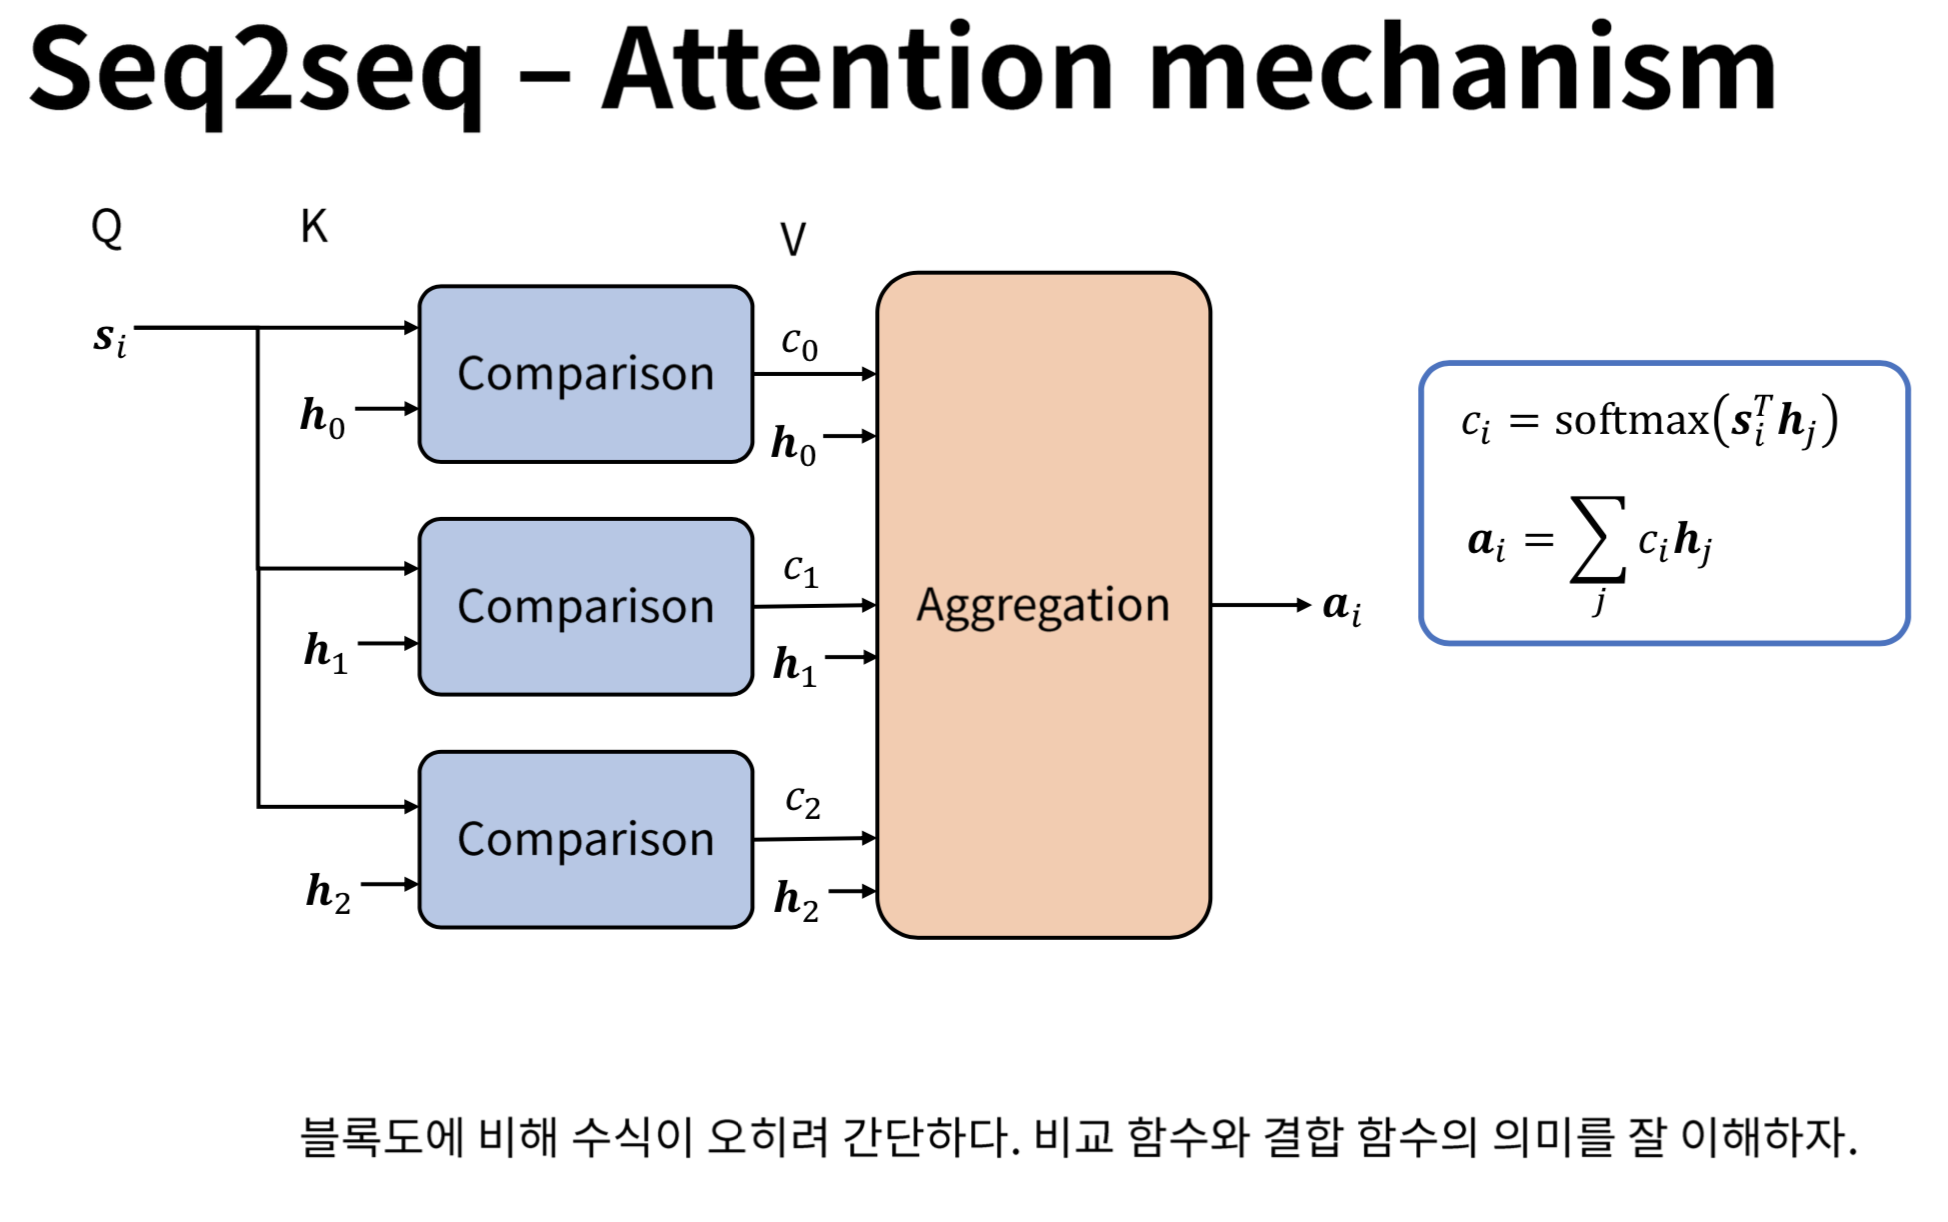 Seq2seq - Attention mechanism